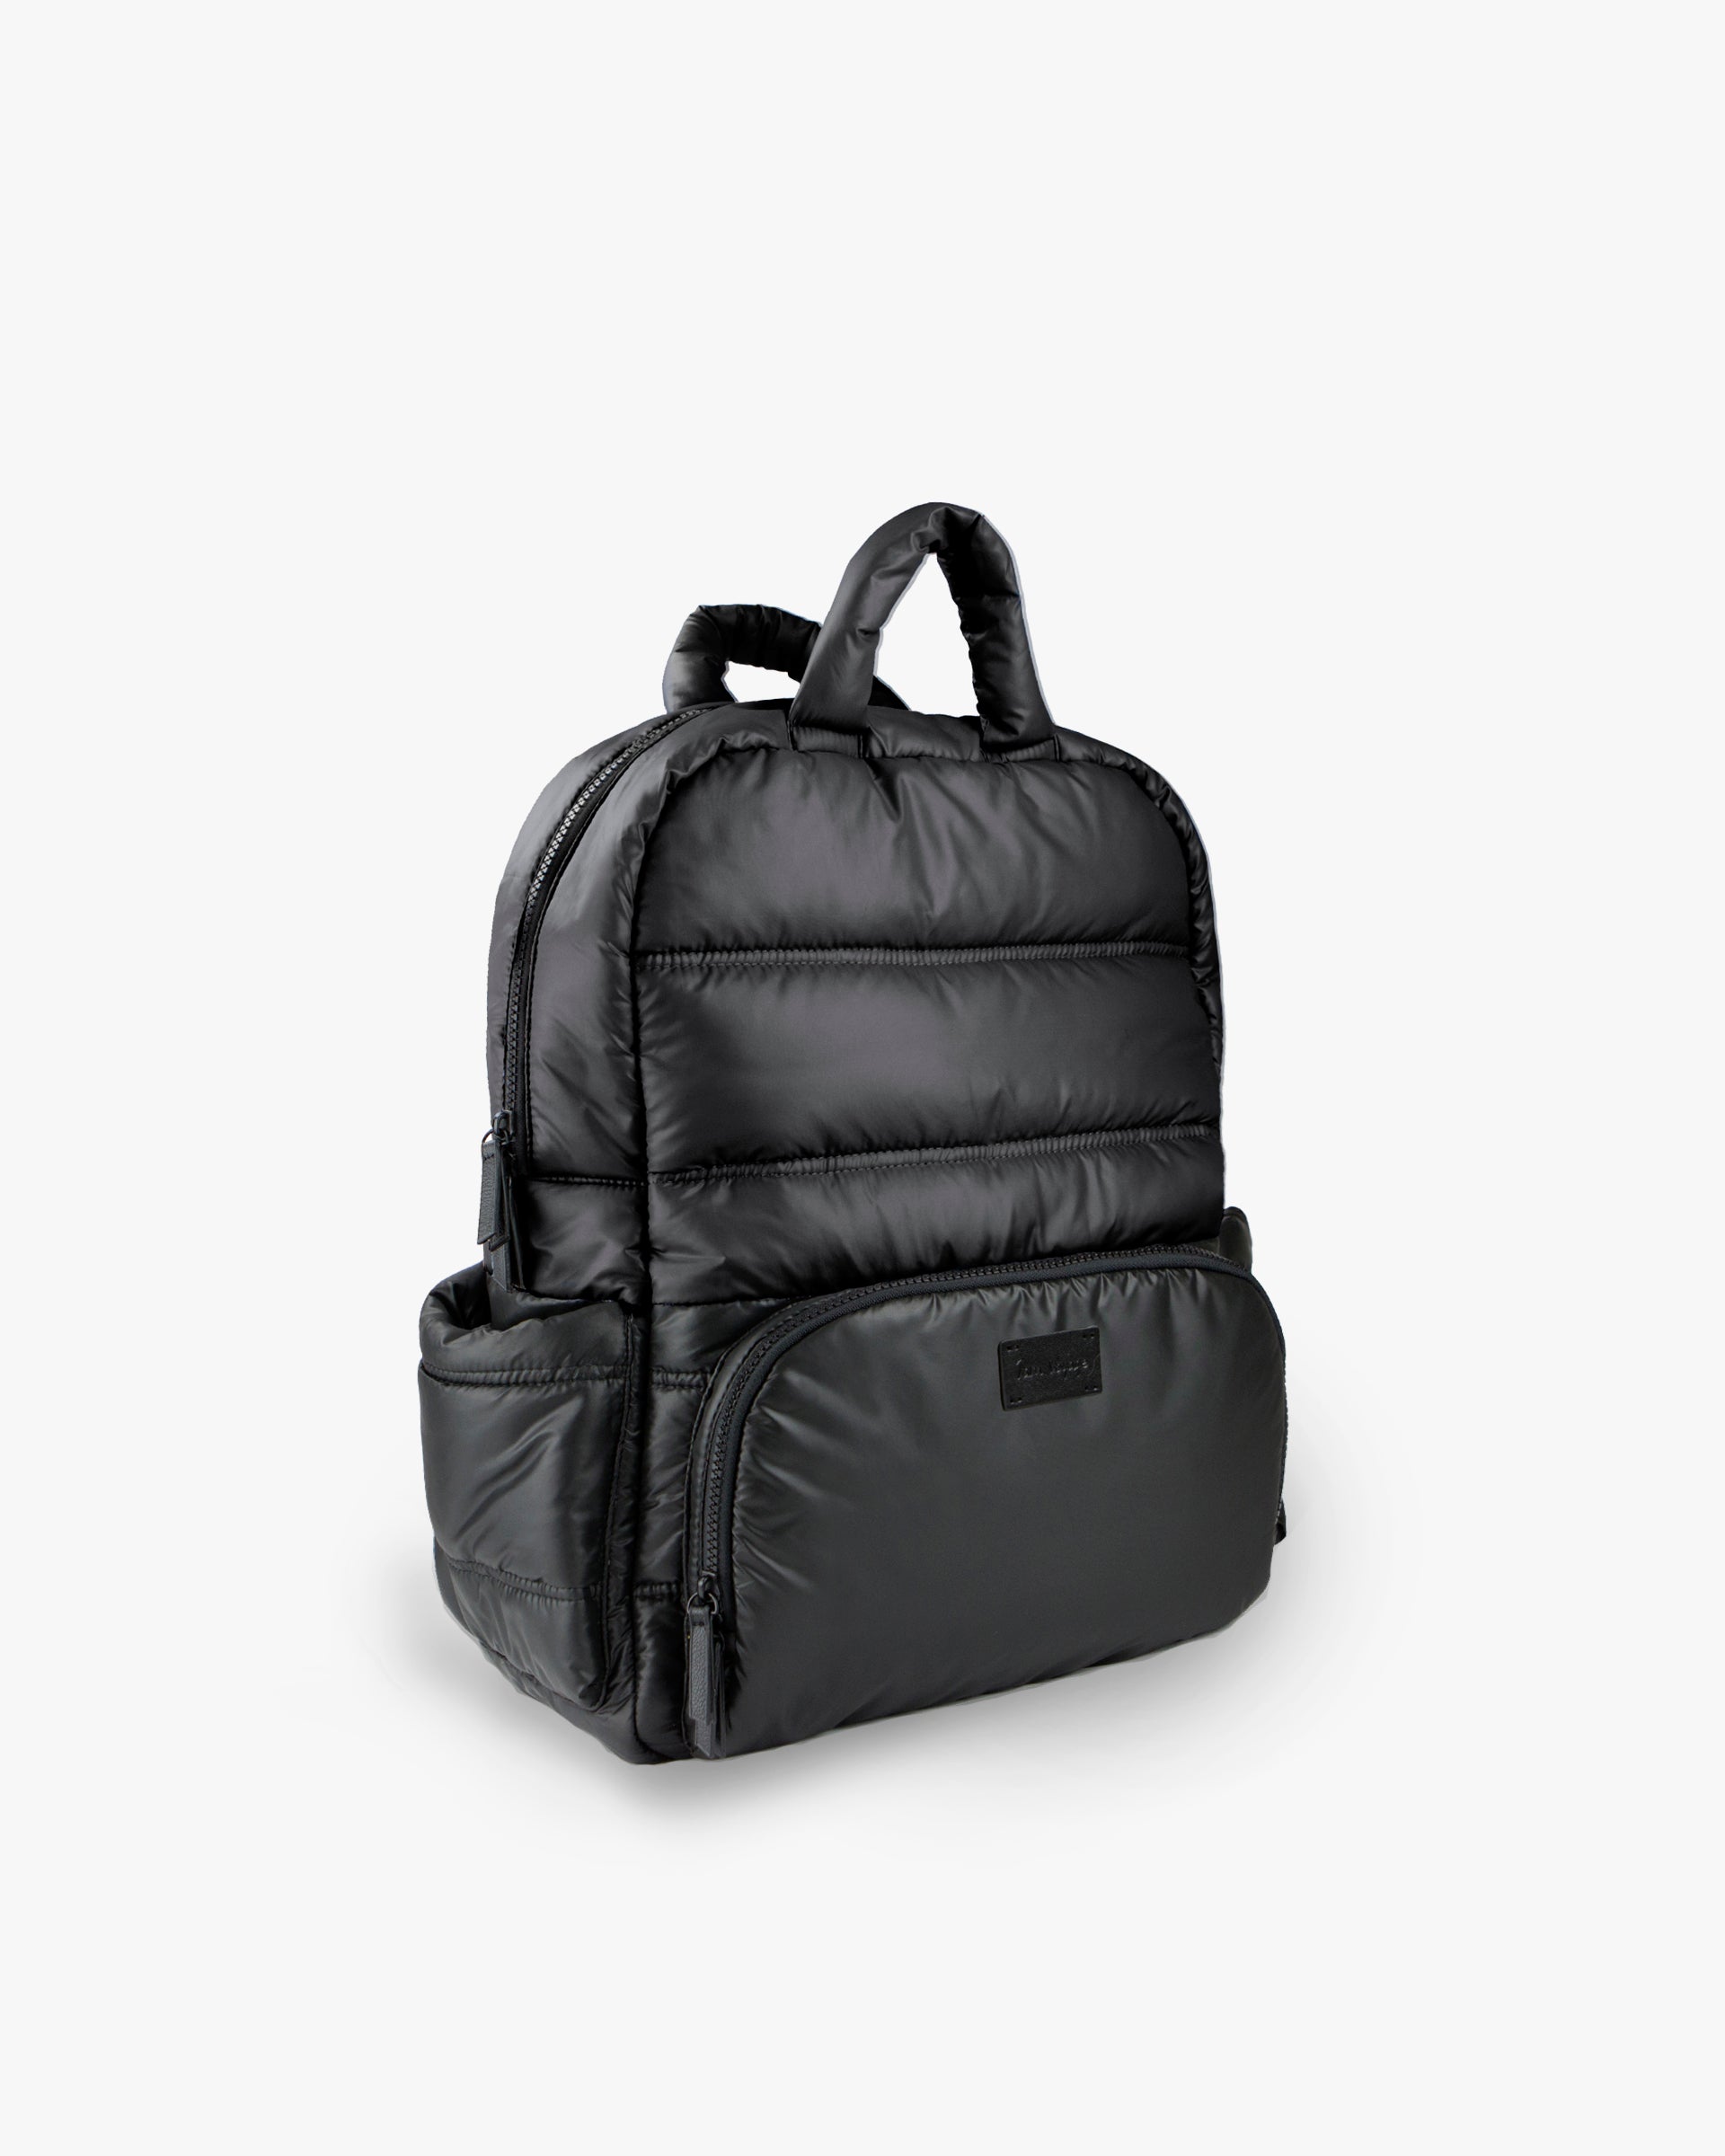 Black/EveryDay Bag